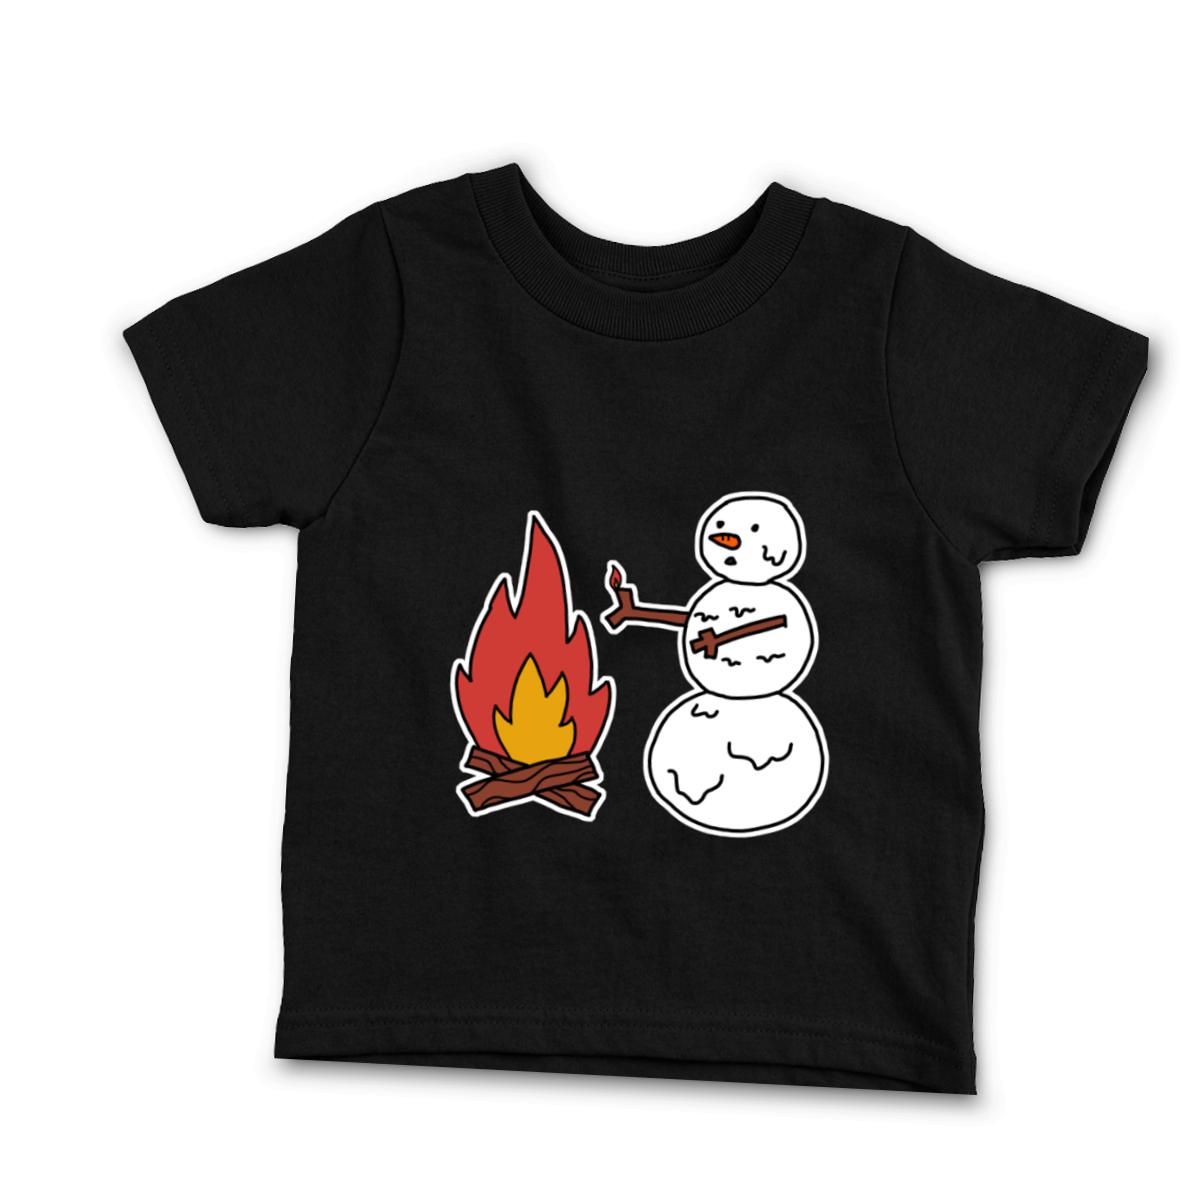 Snowman Keeping Warm Toddler Tee 2T black